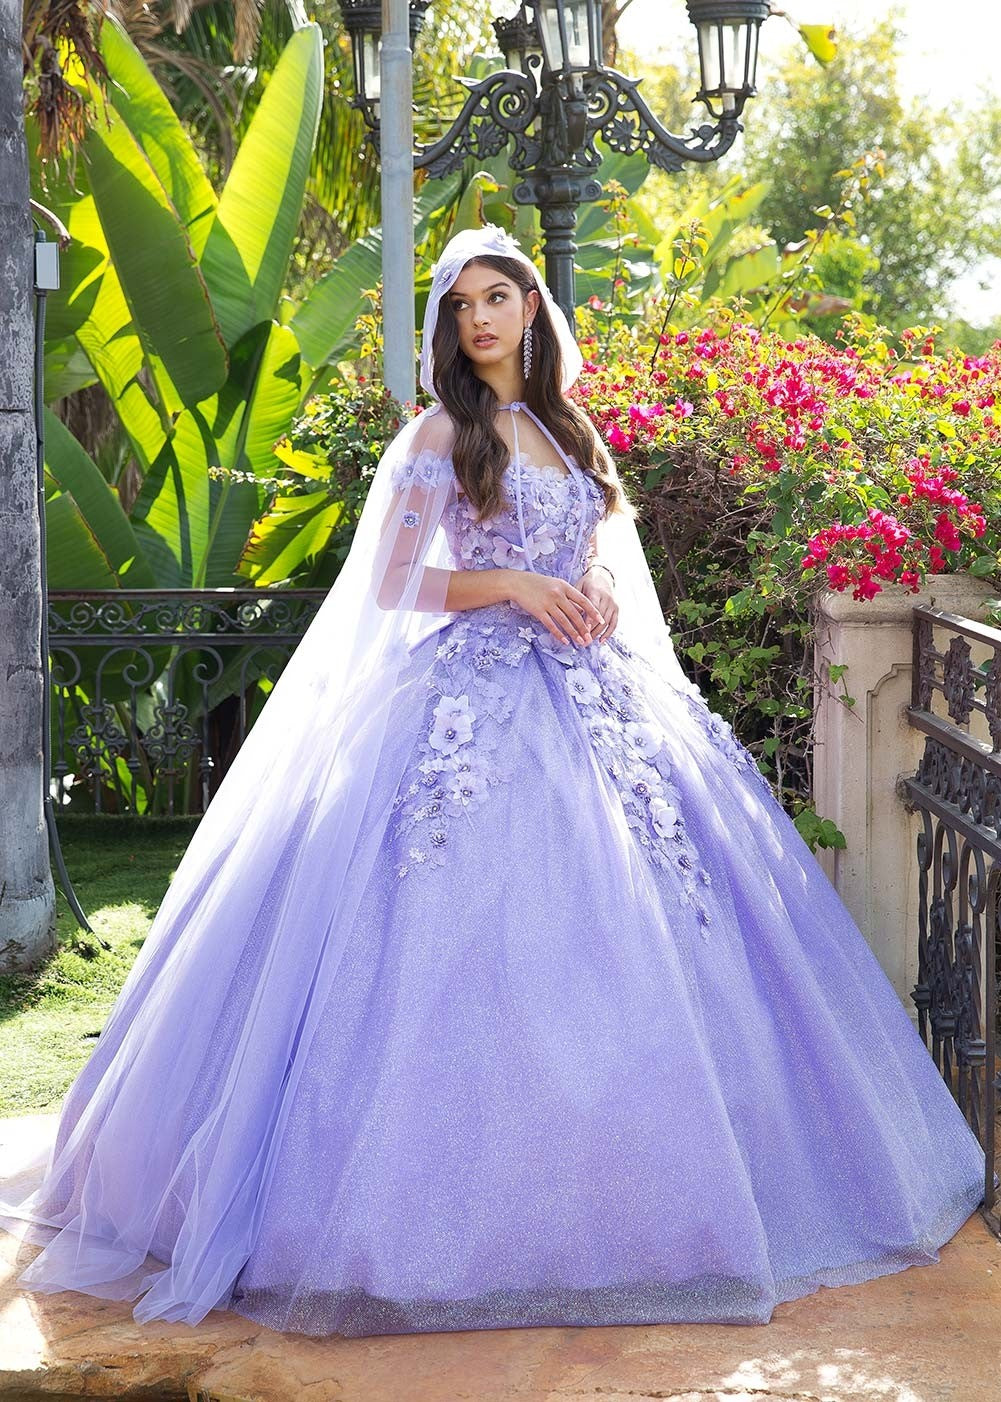 lilac dresses